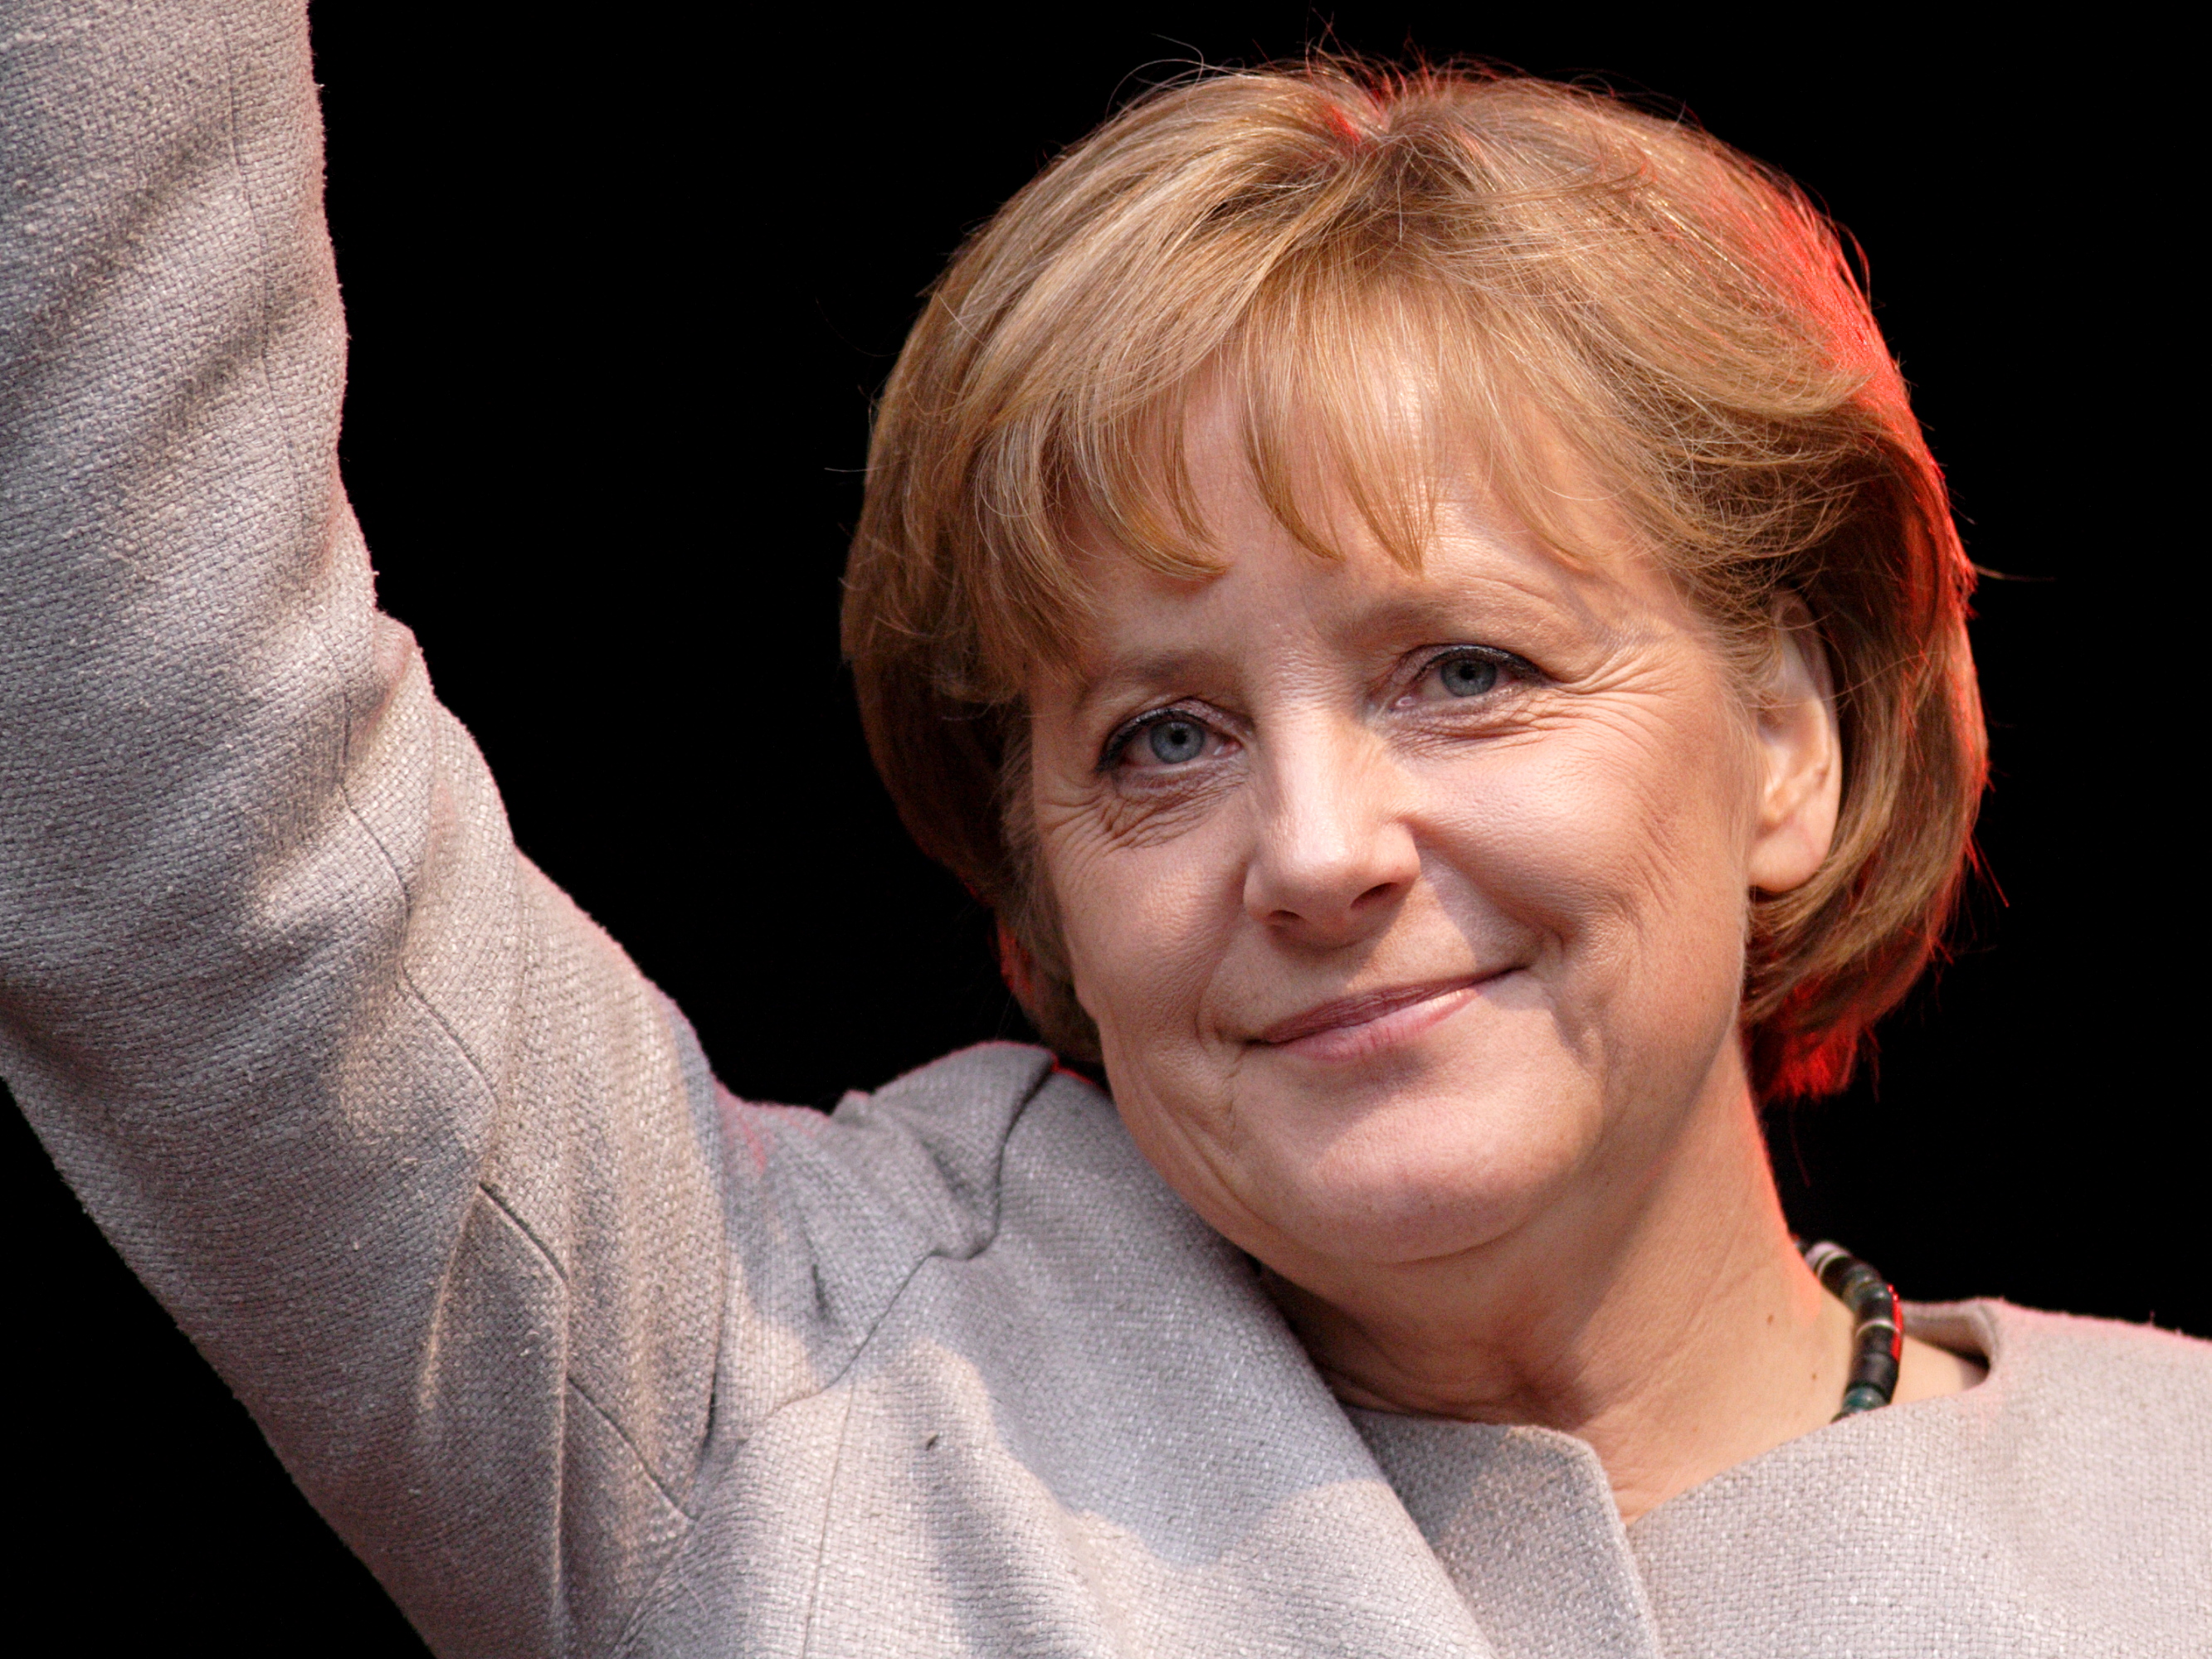 [Accepté] Bundesrepublik Deutschland Angela_Merkel_%282008%29